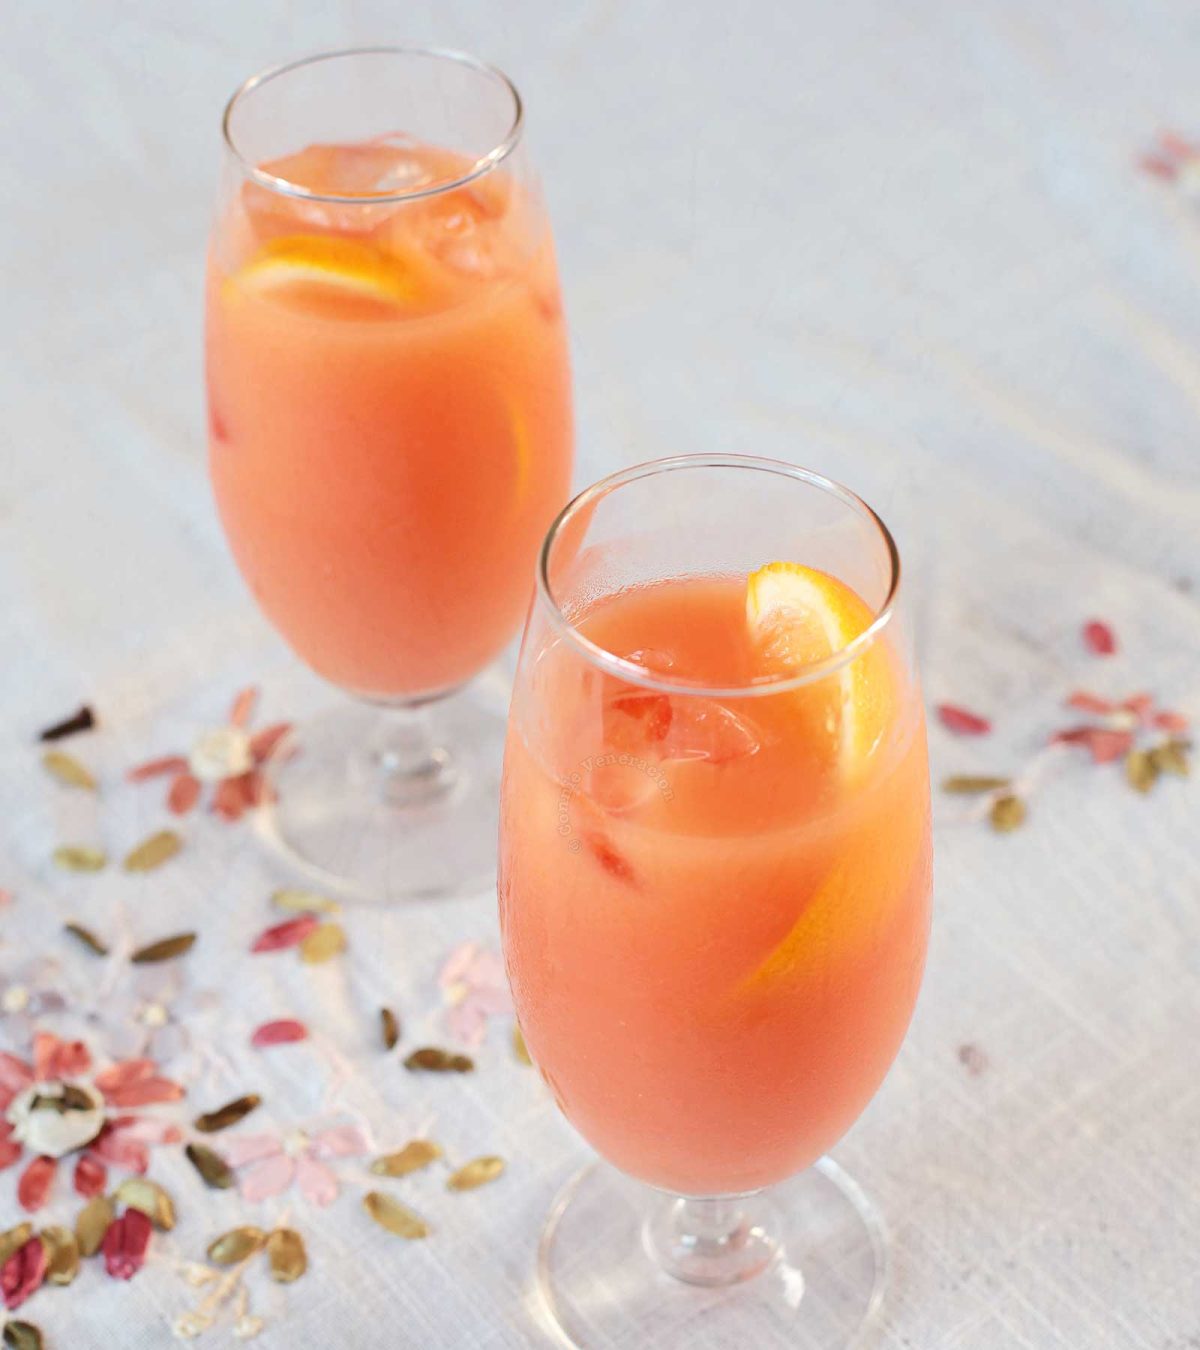 Campari orange cocktail served with orange twists